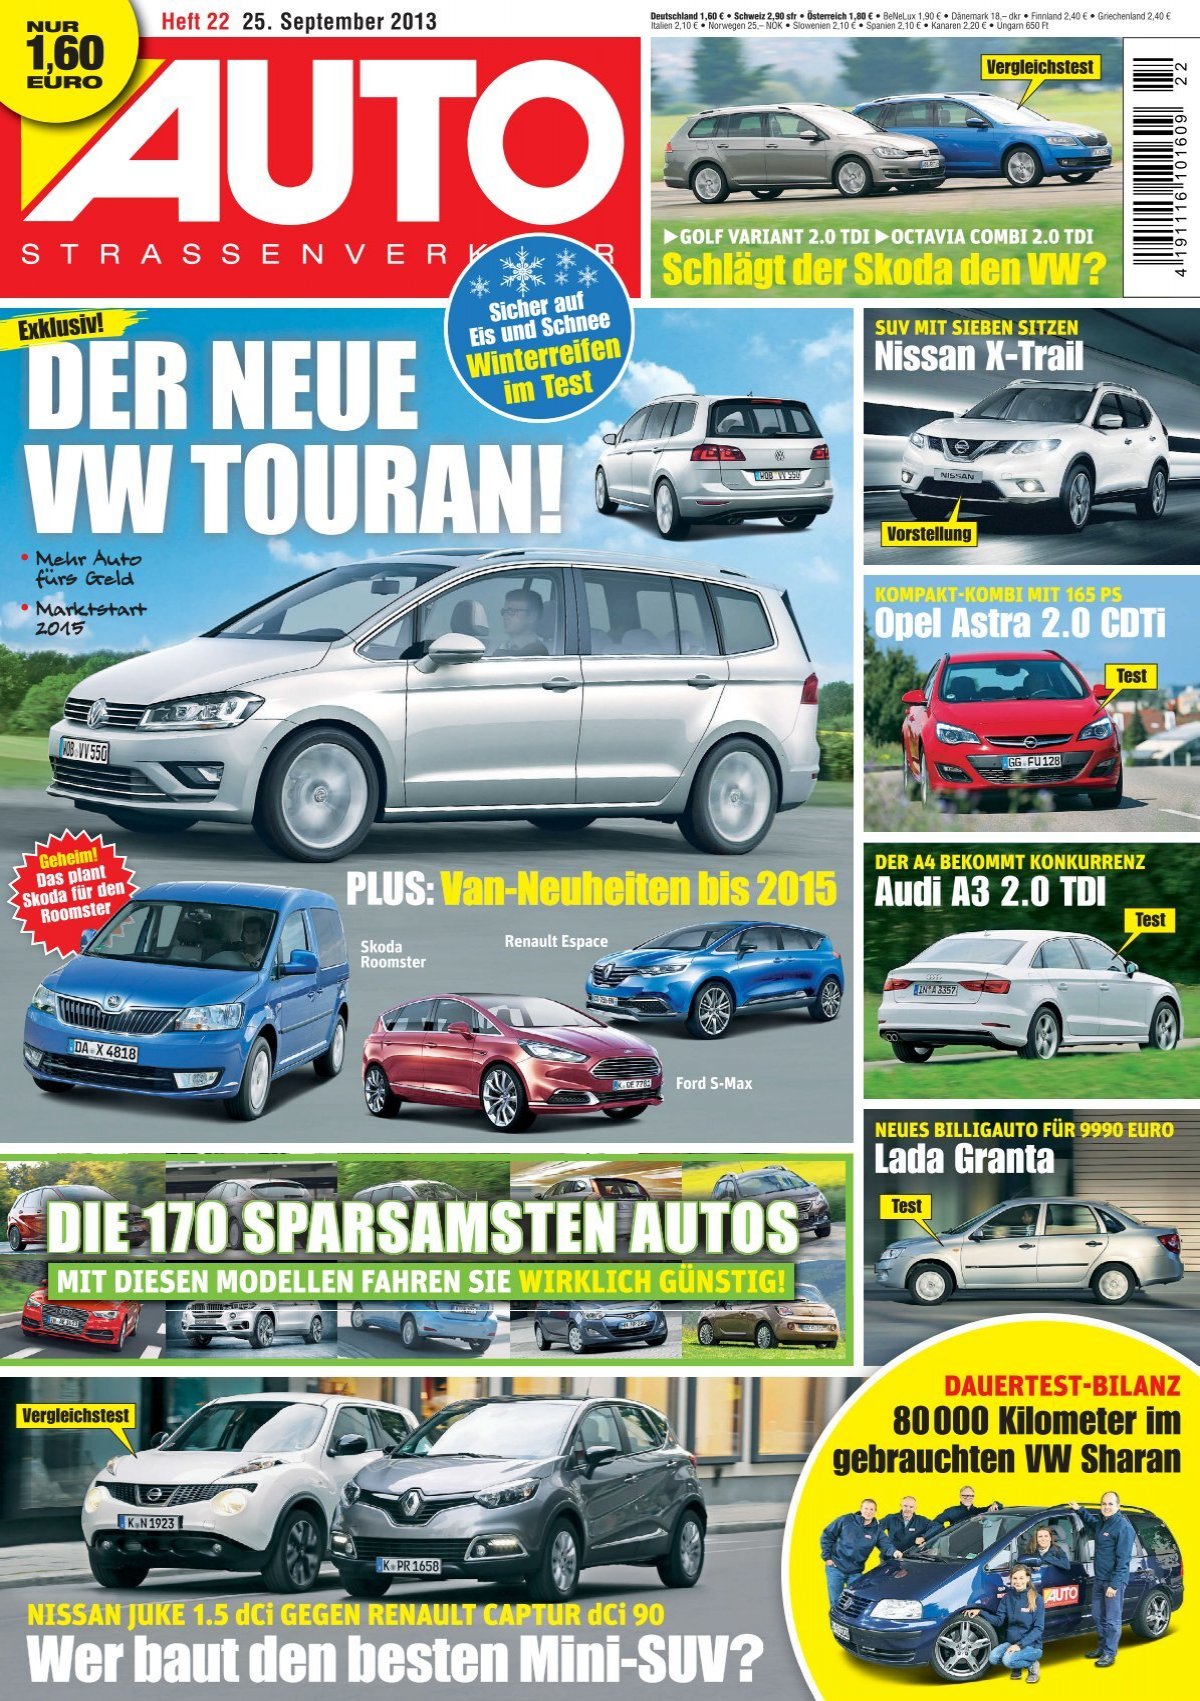 AUTOStraßenverkehr Heft 22-2013